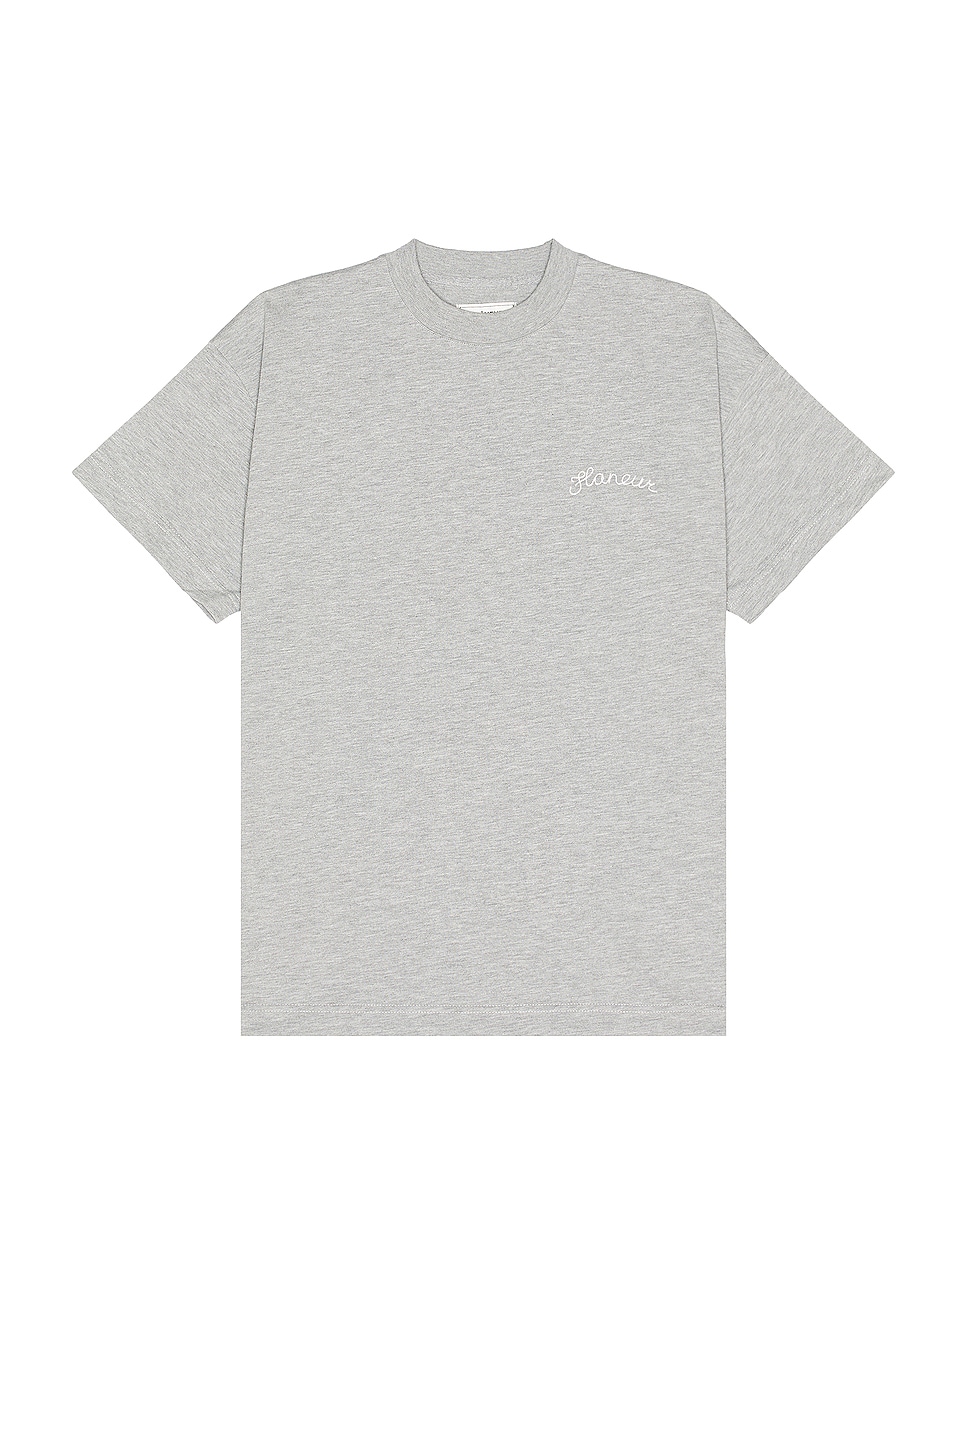 Футболка FLANEUR Signature T-shirt, серый